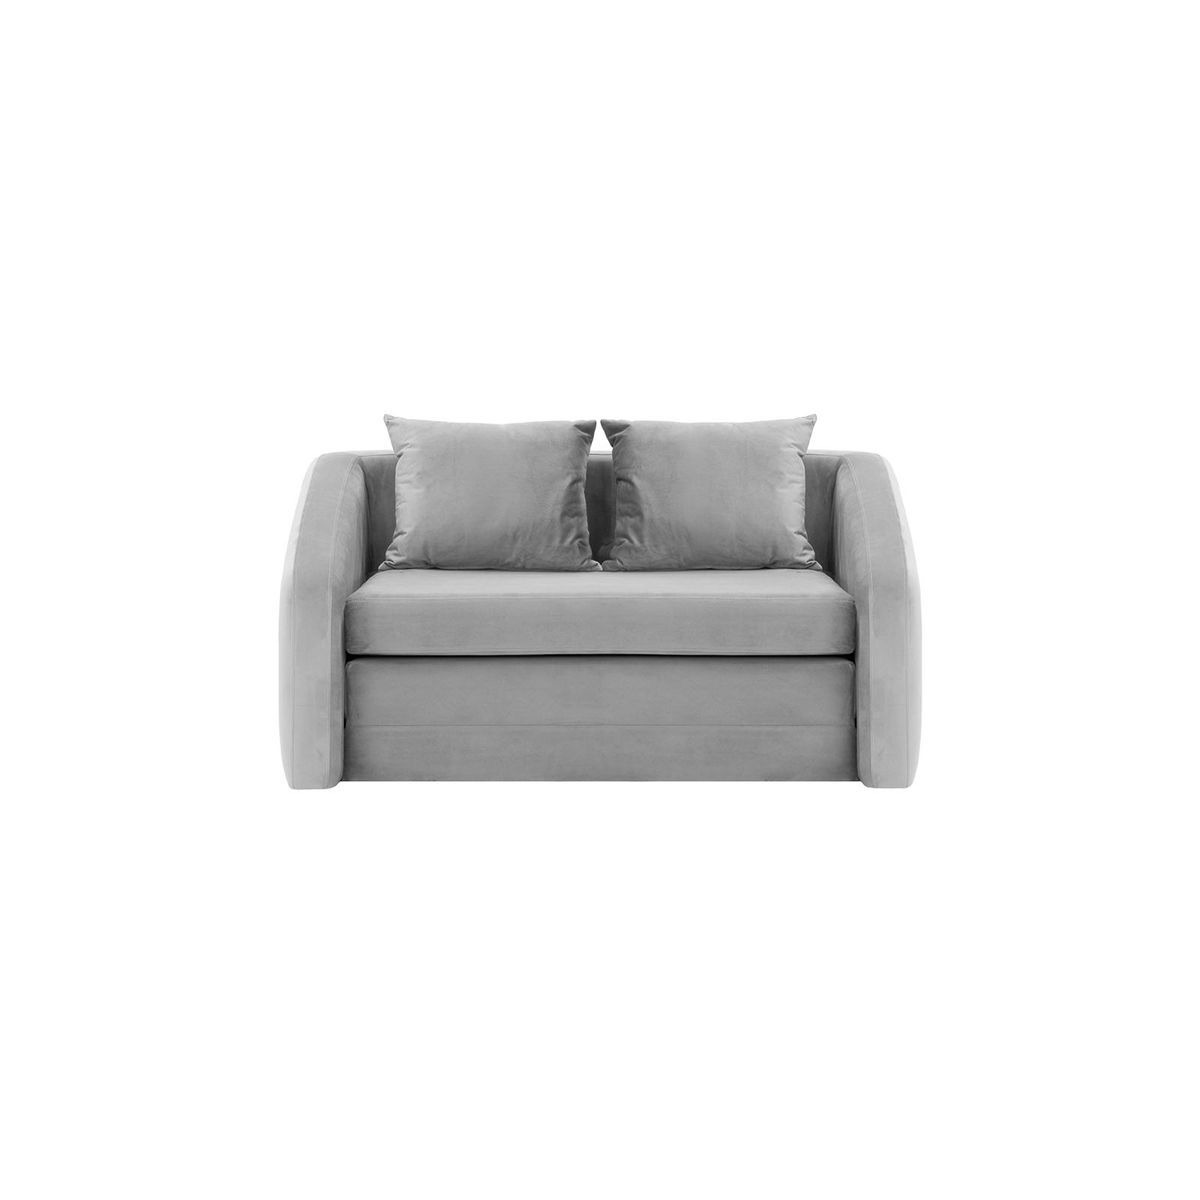 Alma 2 Seater Sofa Bed, silver - image 1